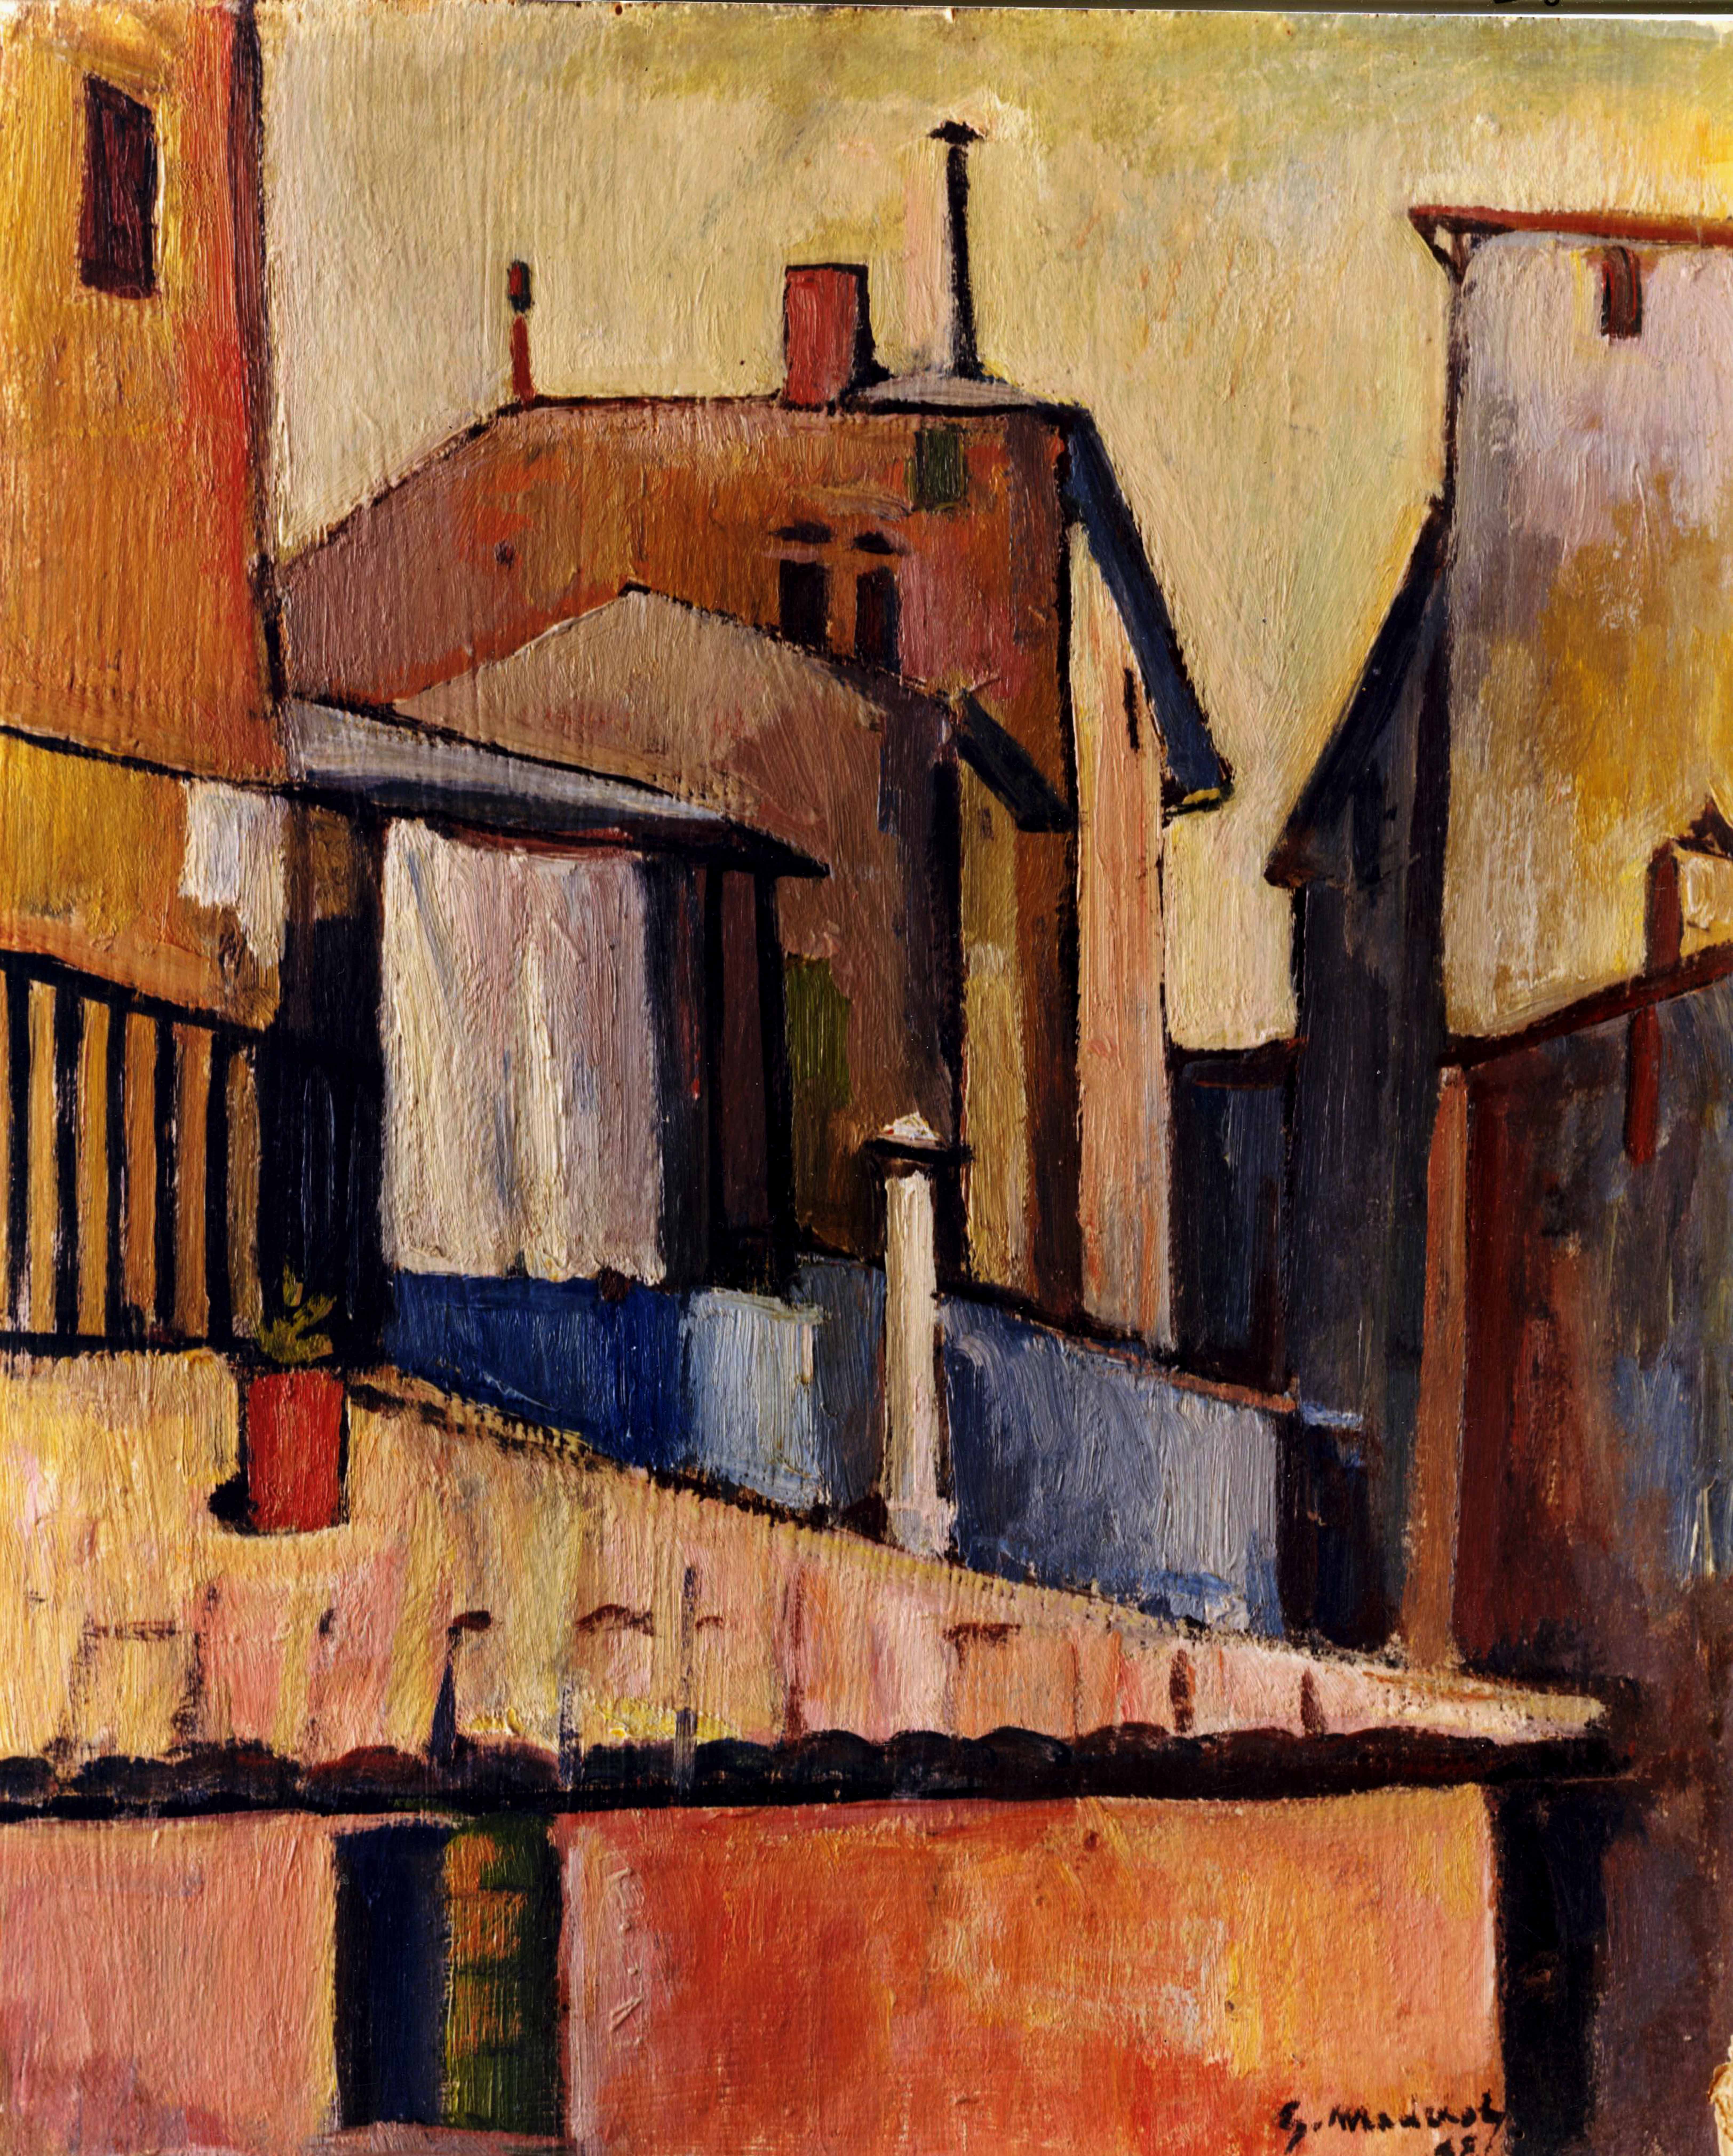 Giorgio Maddoli, "Via Vincioli, Perugia" (1948)